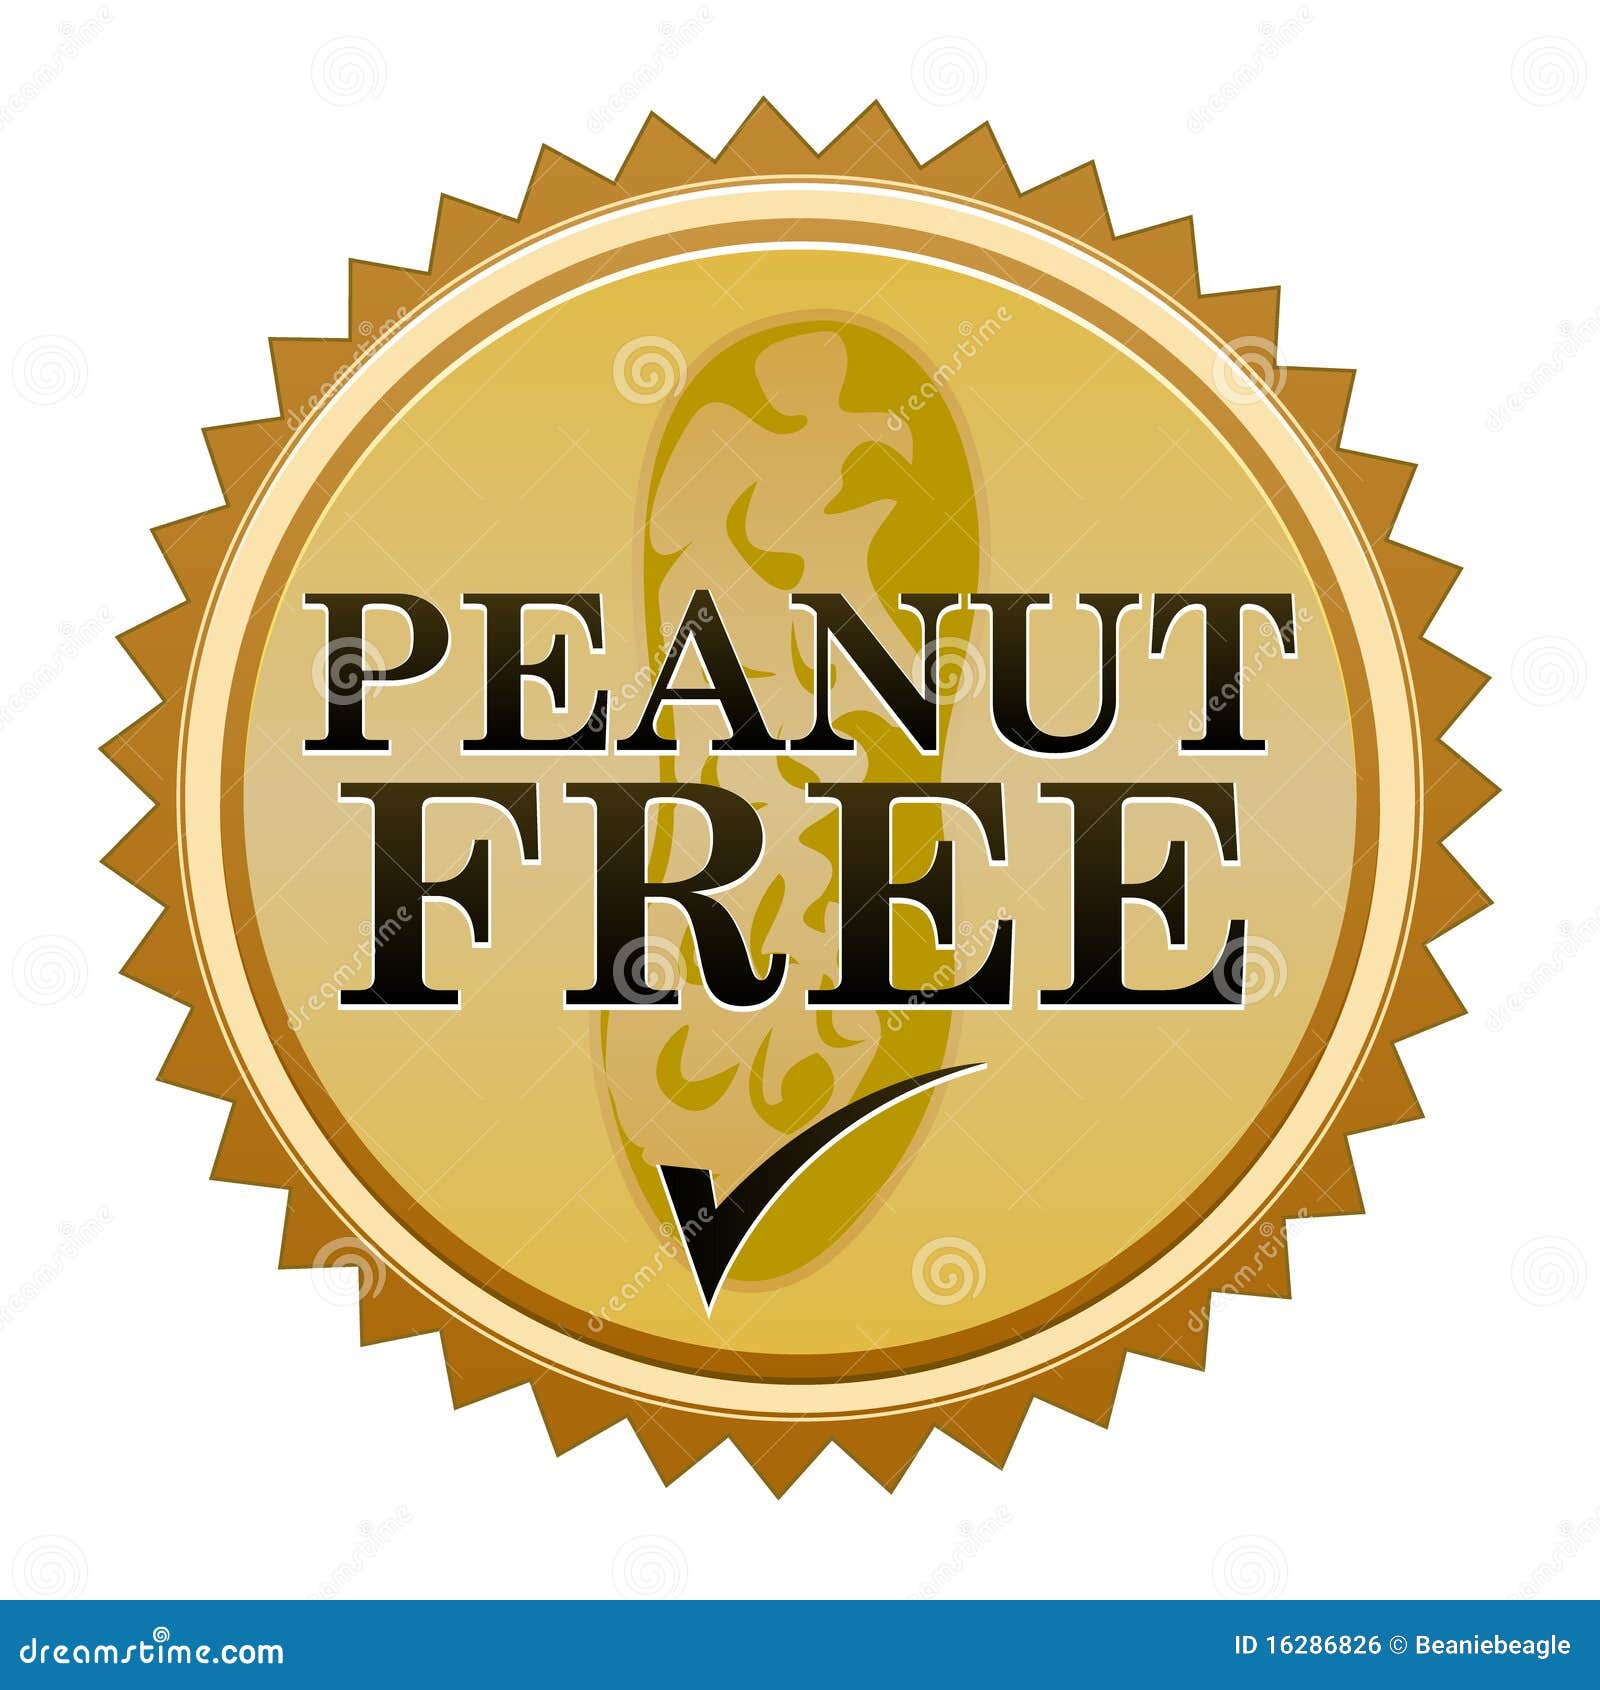 Peanut Free Seal stock vector. Illustration of circle - 16286826